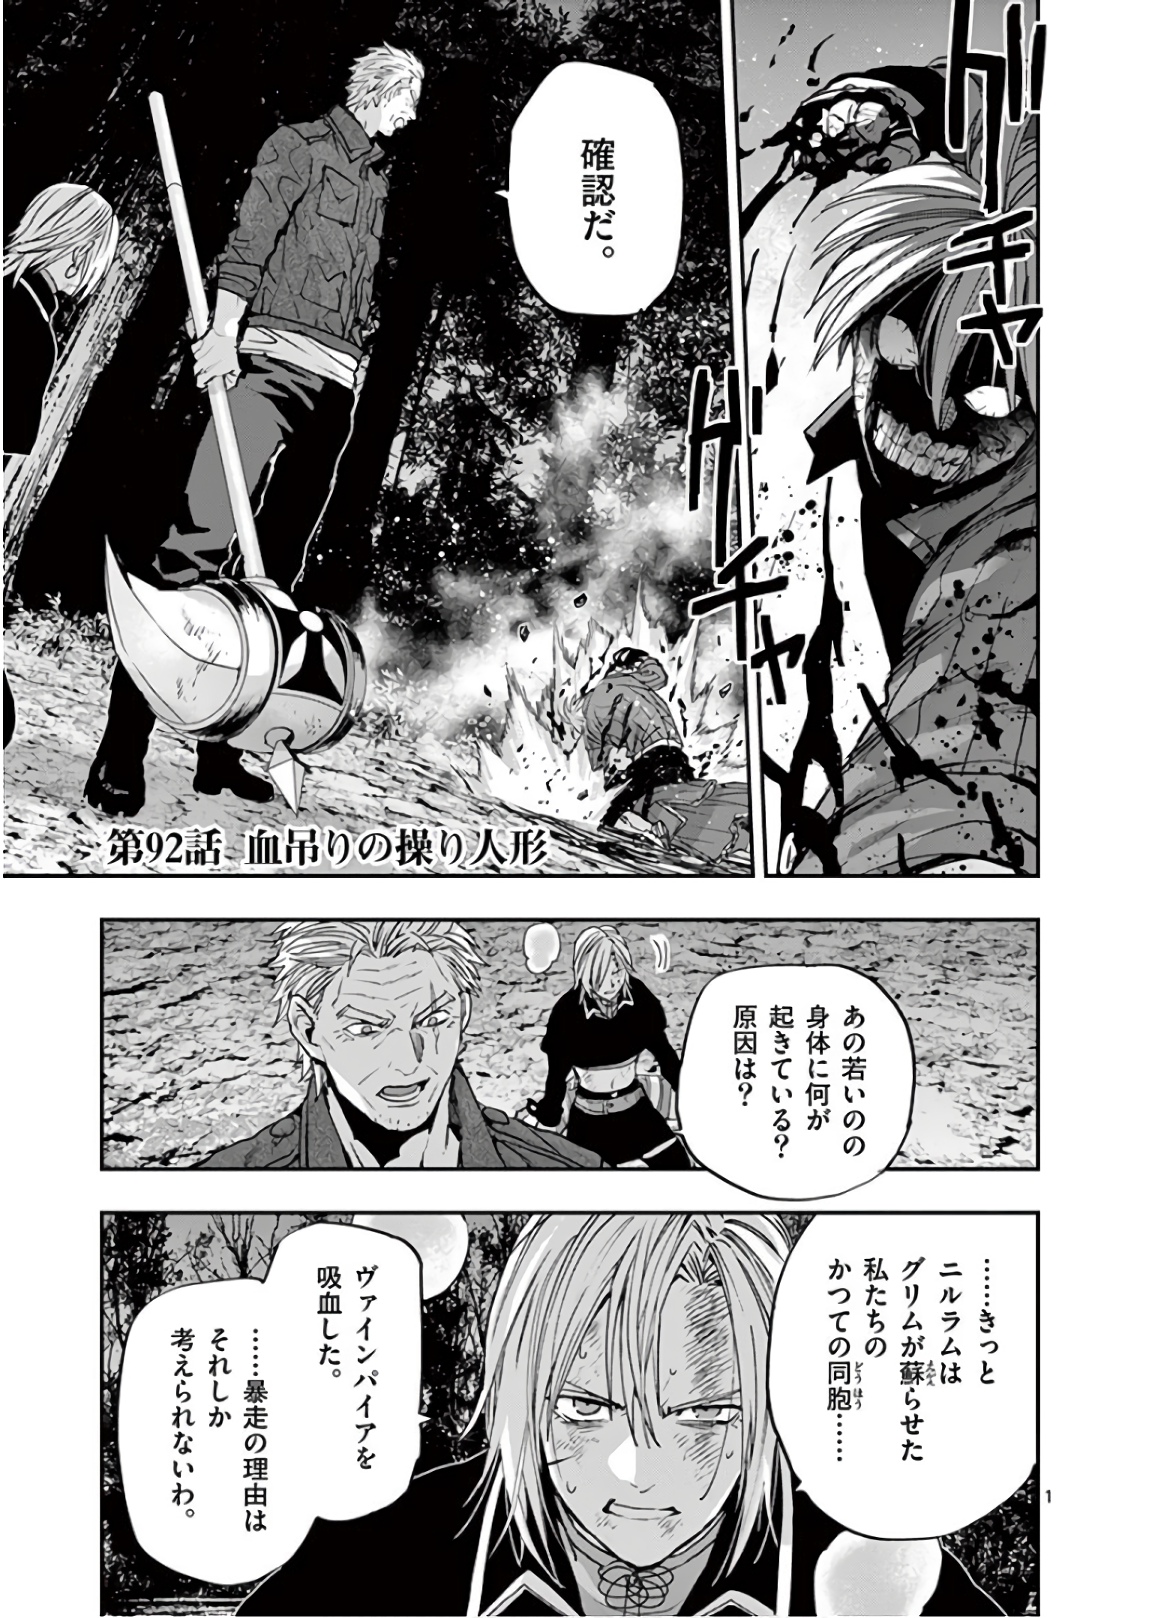 Ginrou Bloodborne - Chapter 92 - Page 1